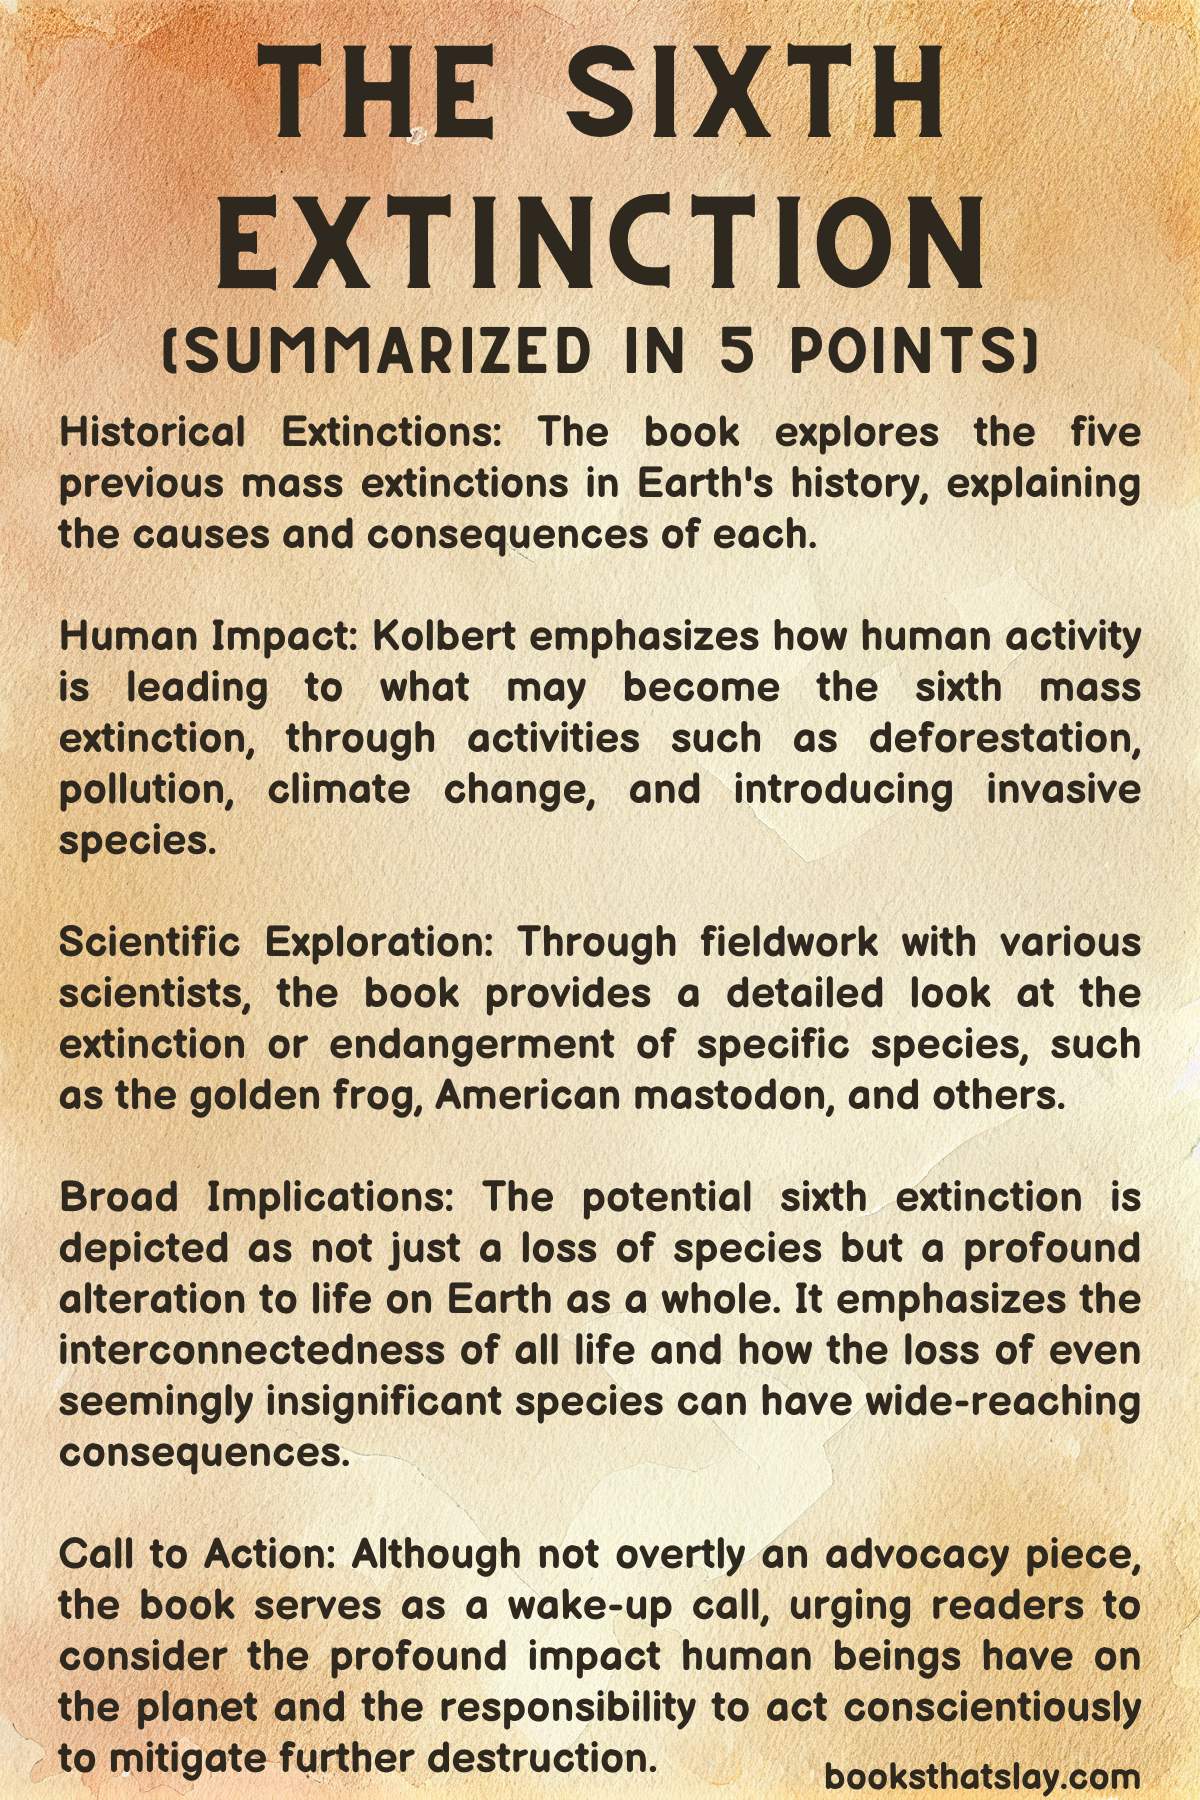 The Sixth Extinction Summary